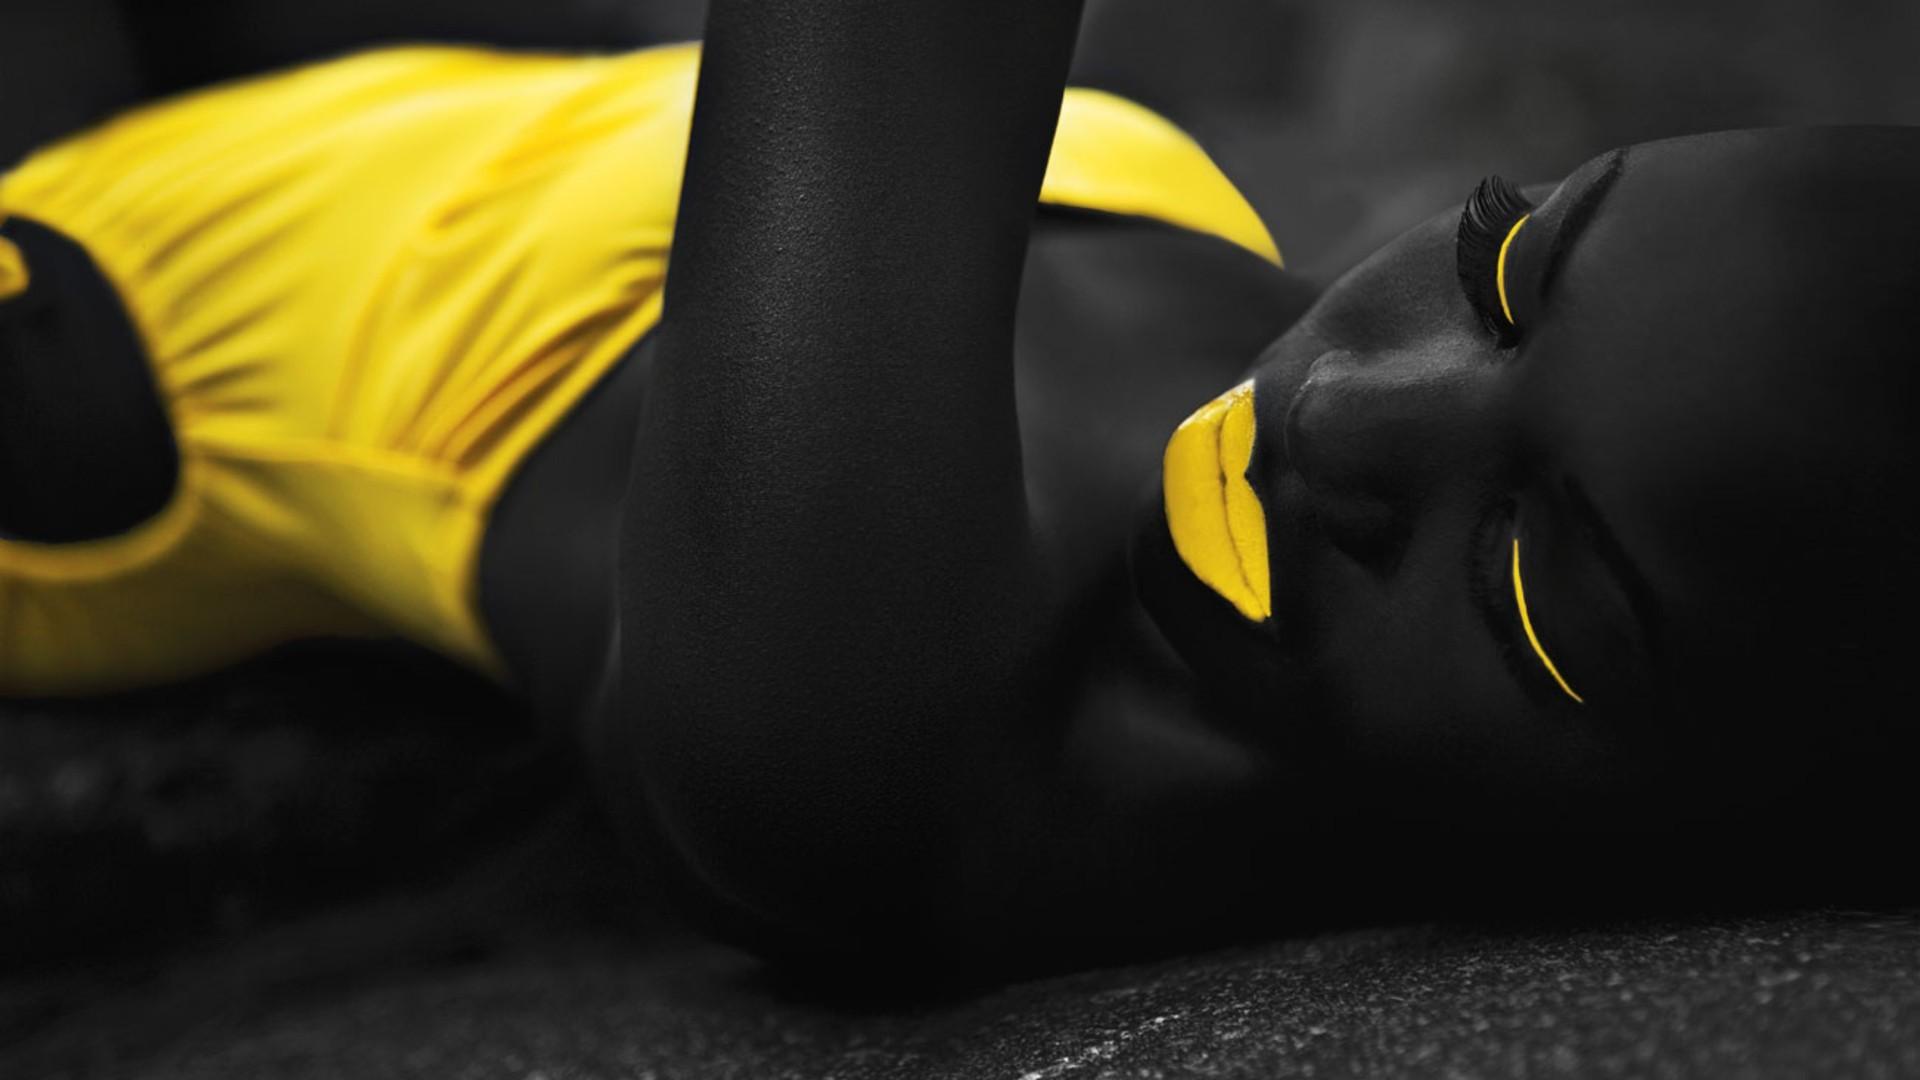 Yellow black girl photographer wallpaper